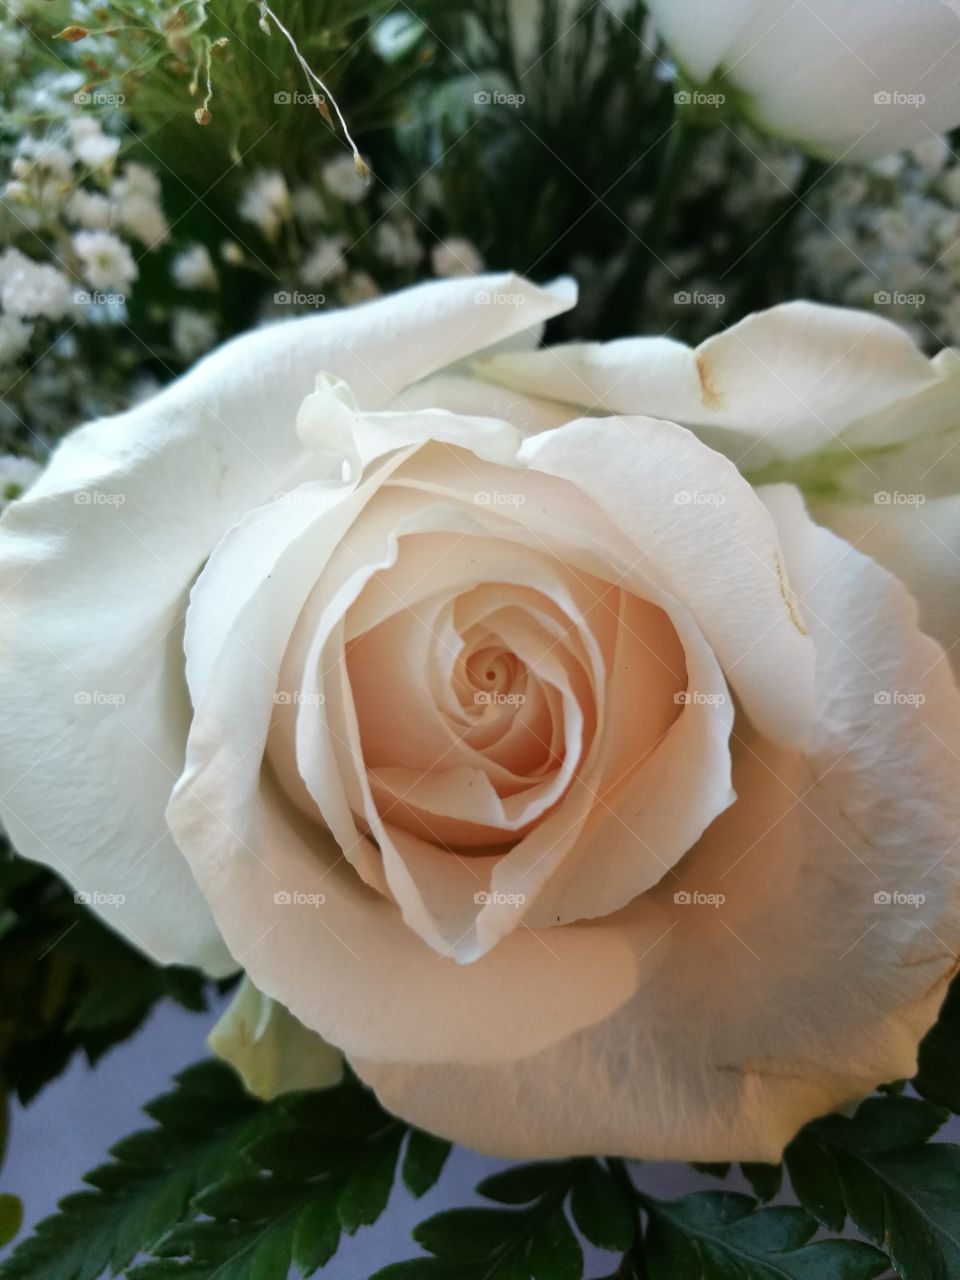 Sweet avalance rose